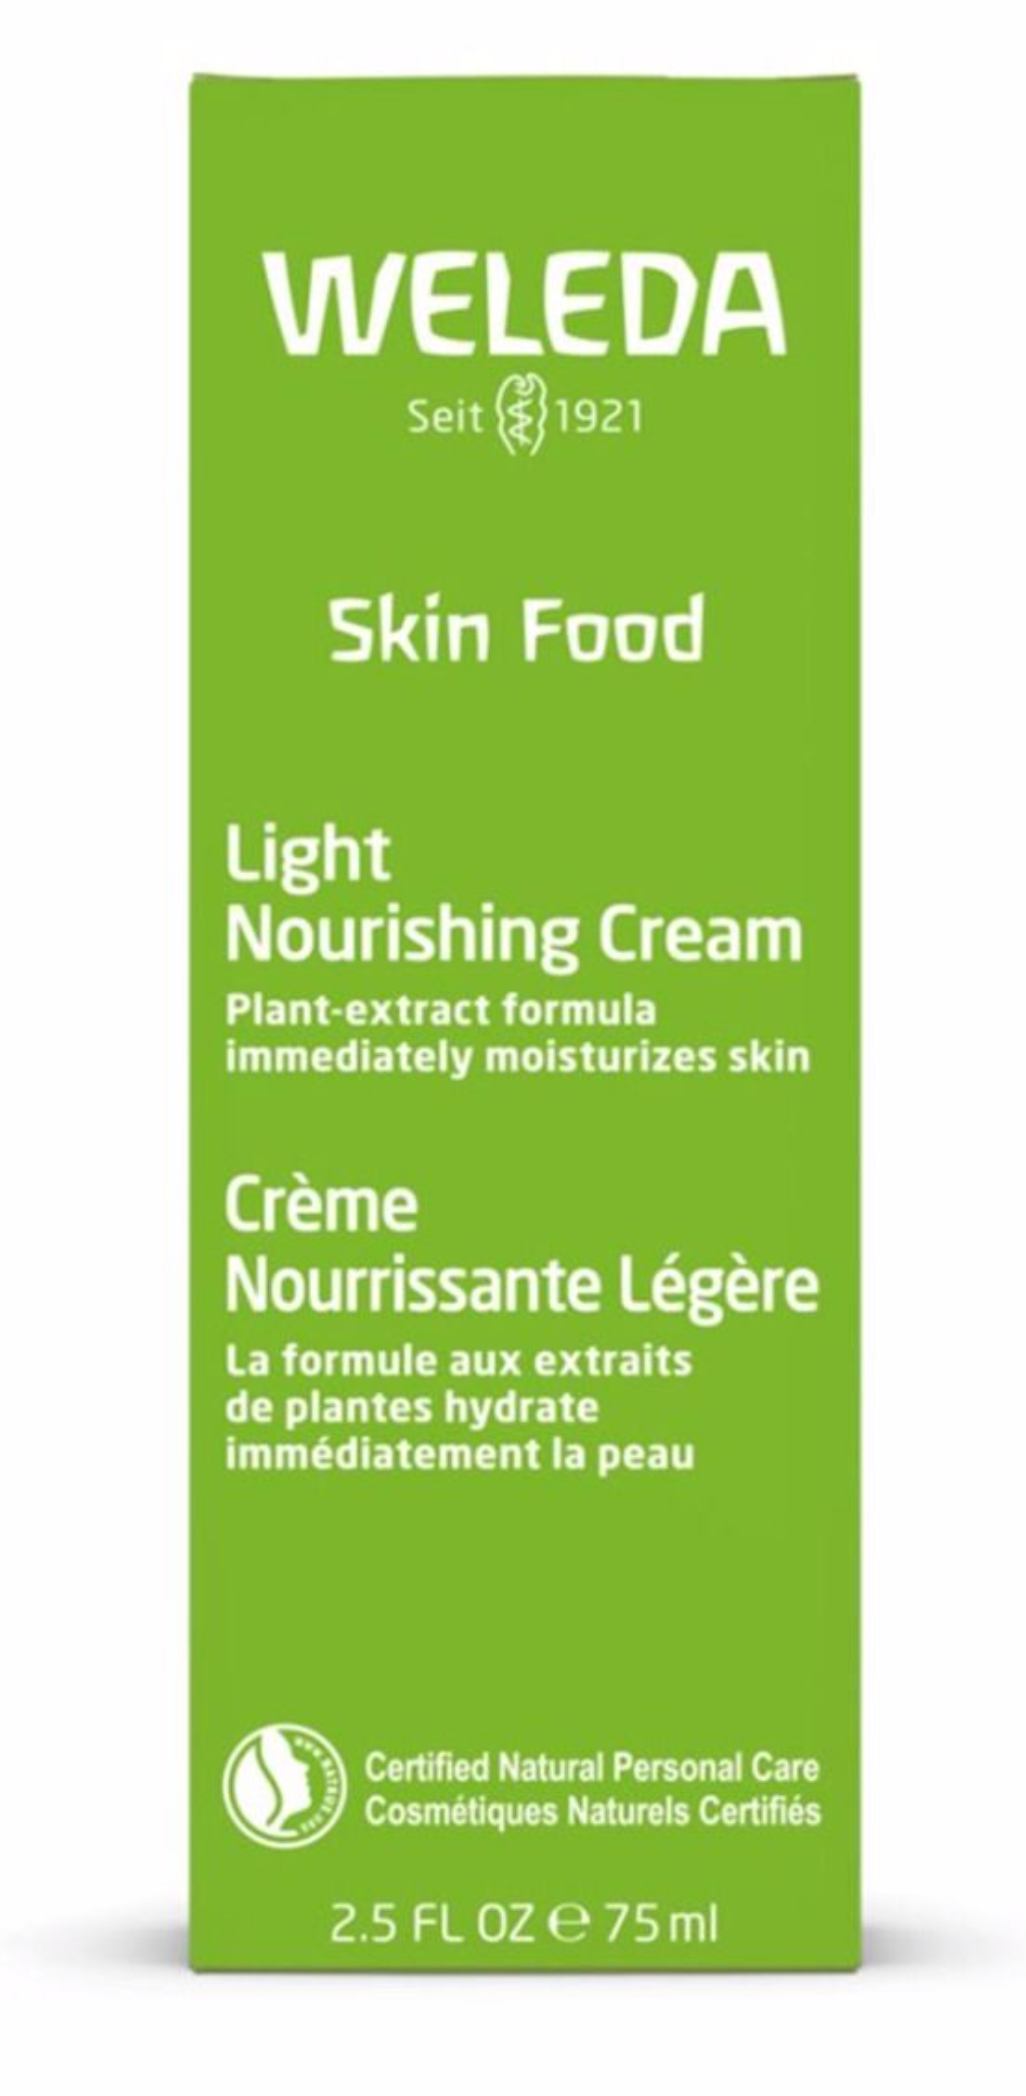 Shop Weleda Skin Food Light Nourishing Cream 2.5 fl.oz. at New London Pharmacy. Free shipping on all orders of $50.00.